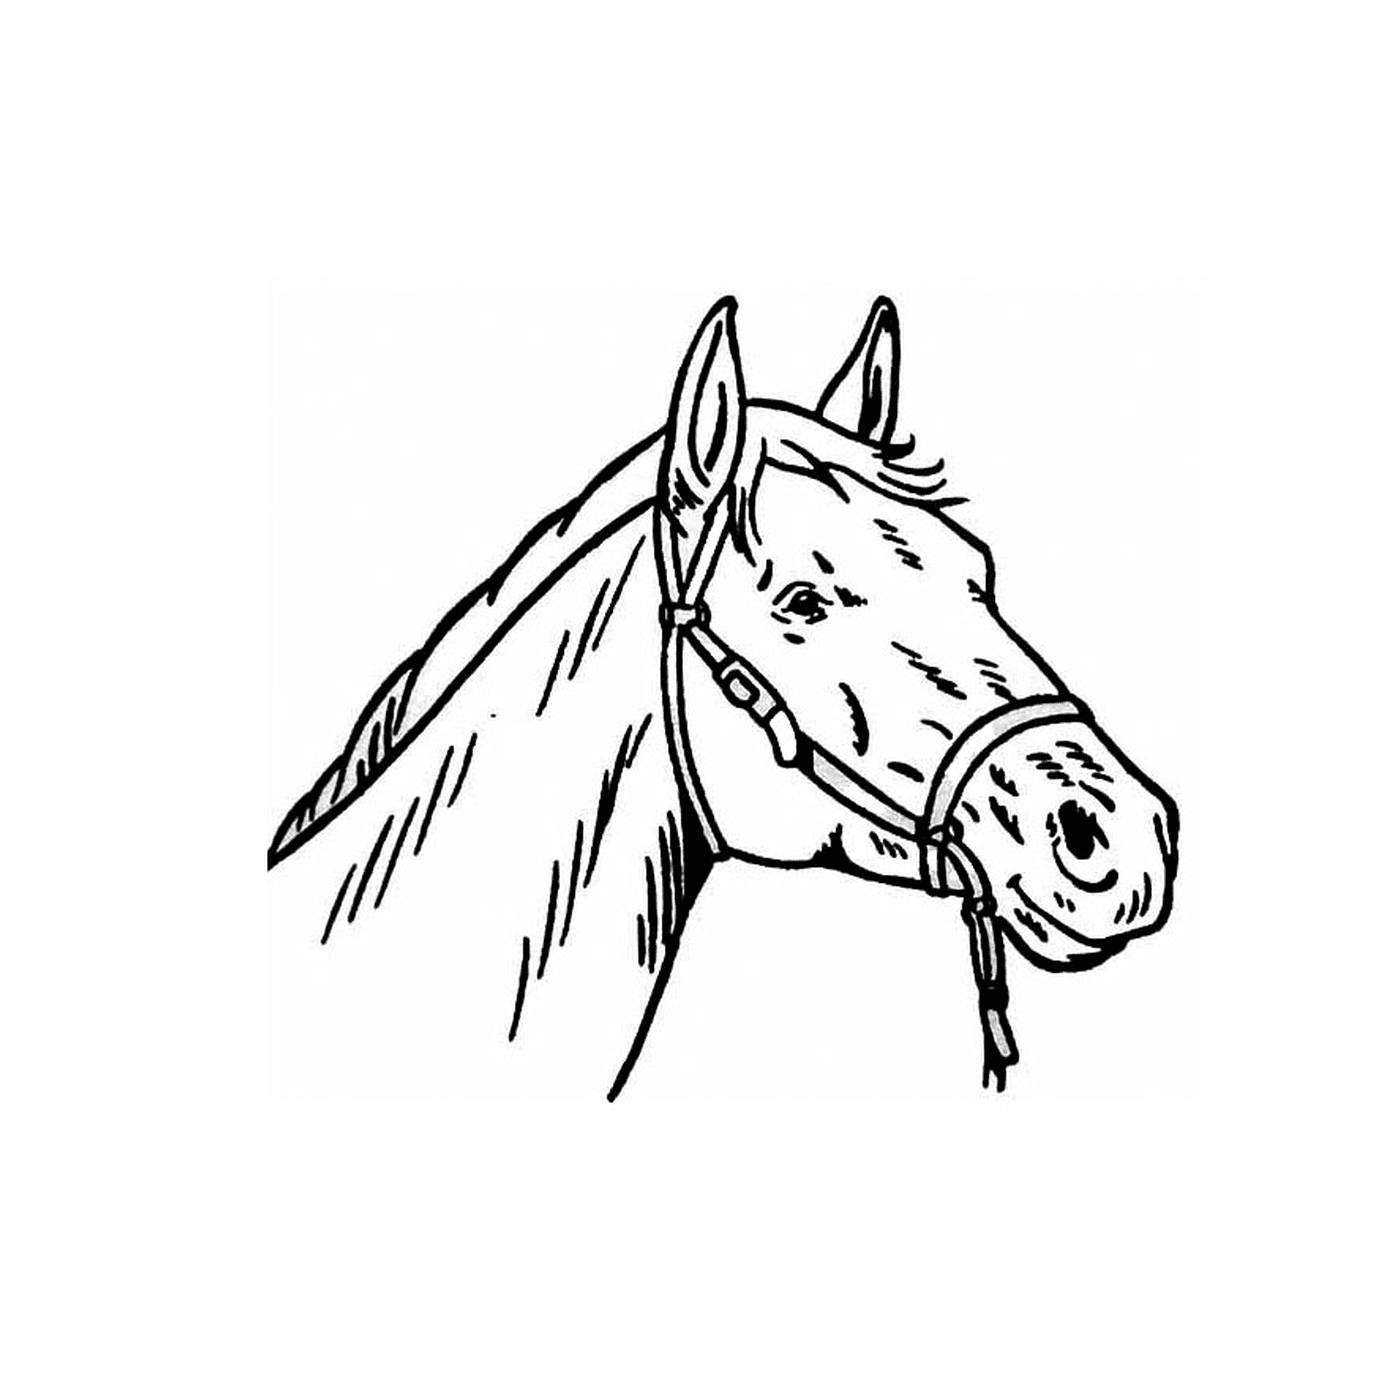  A striking portrait of a horse's head 